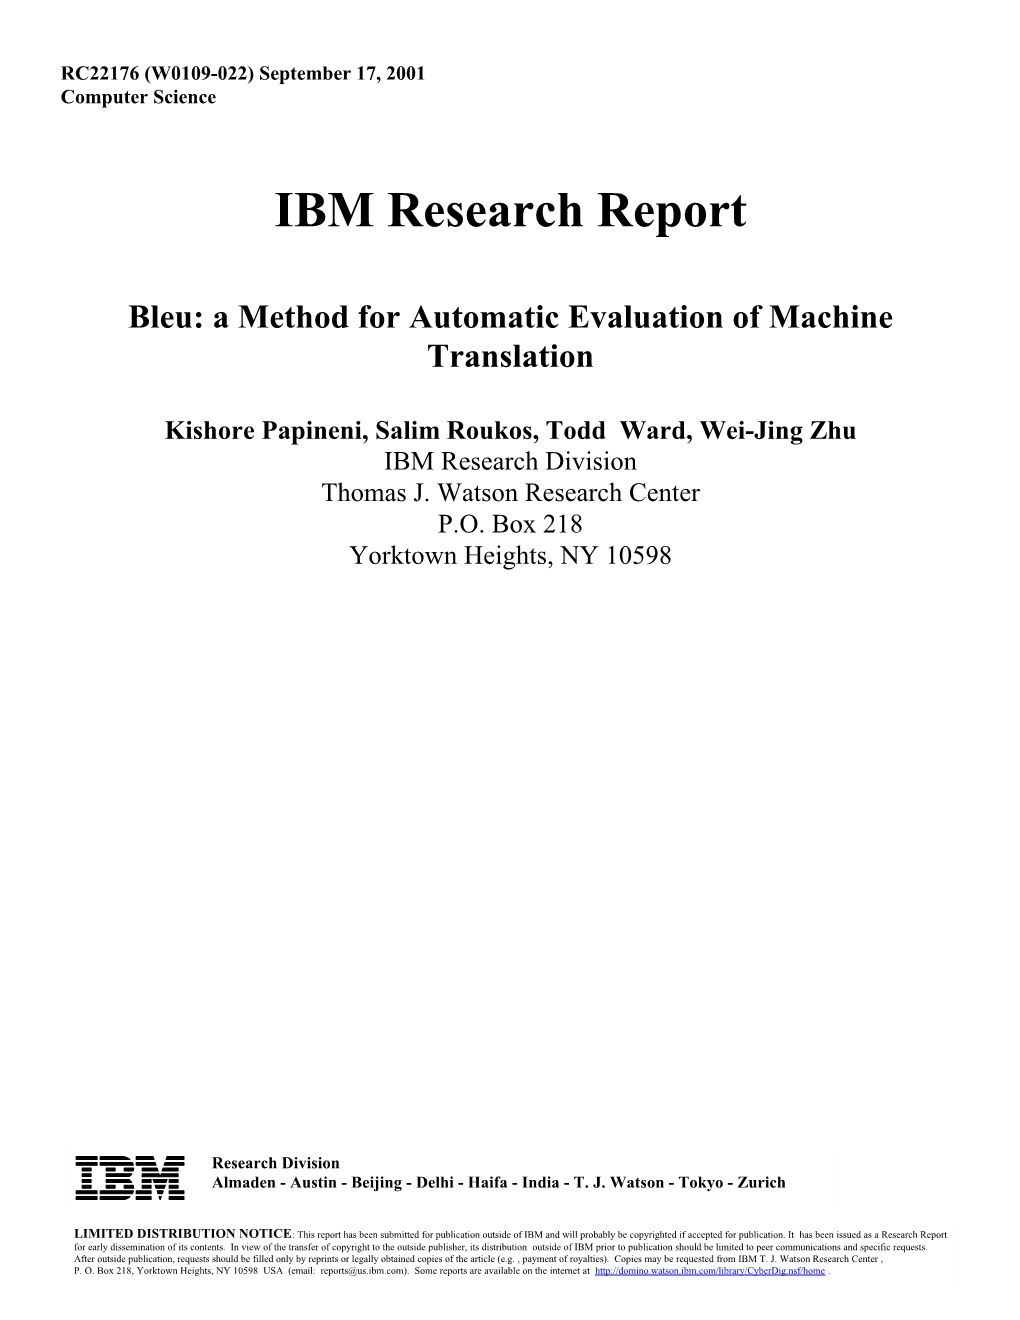 Bleu: a Method for Automatic Evaluation of Machine Translation